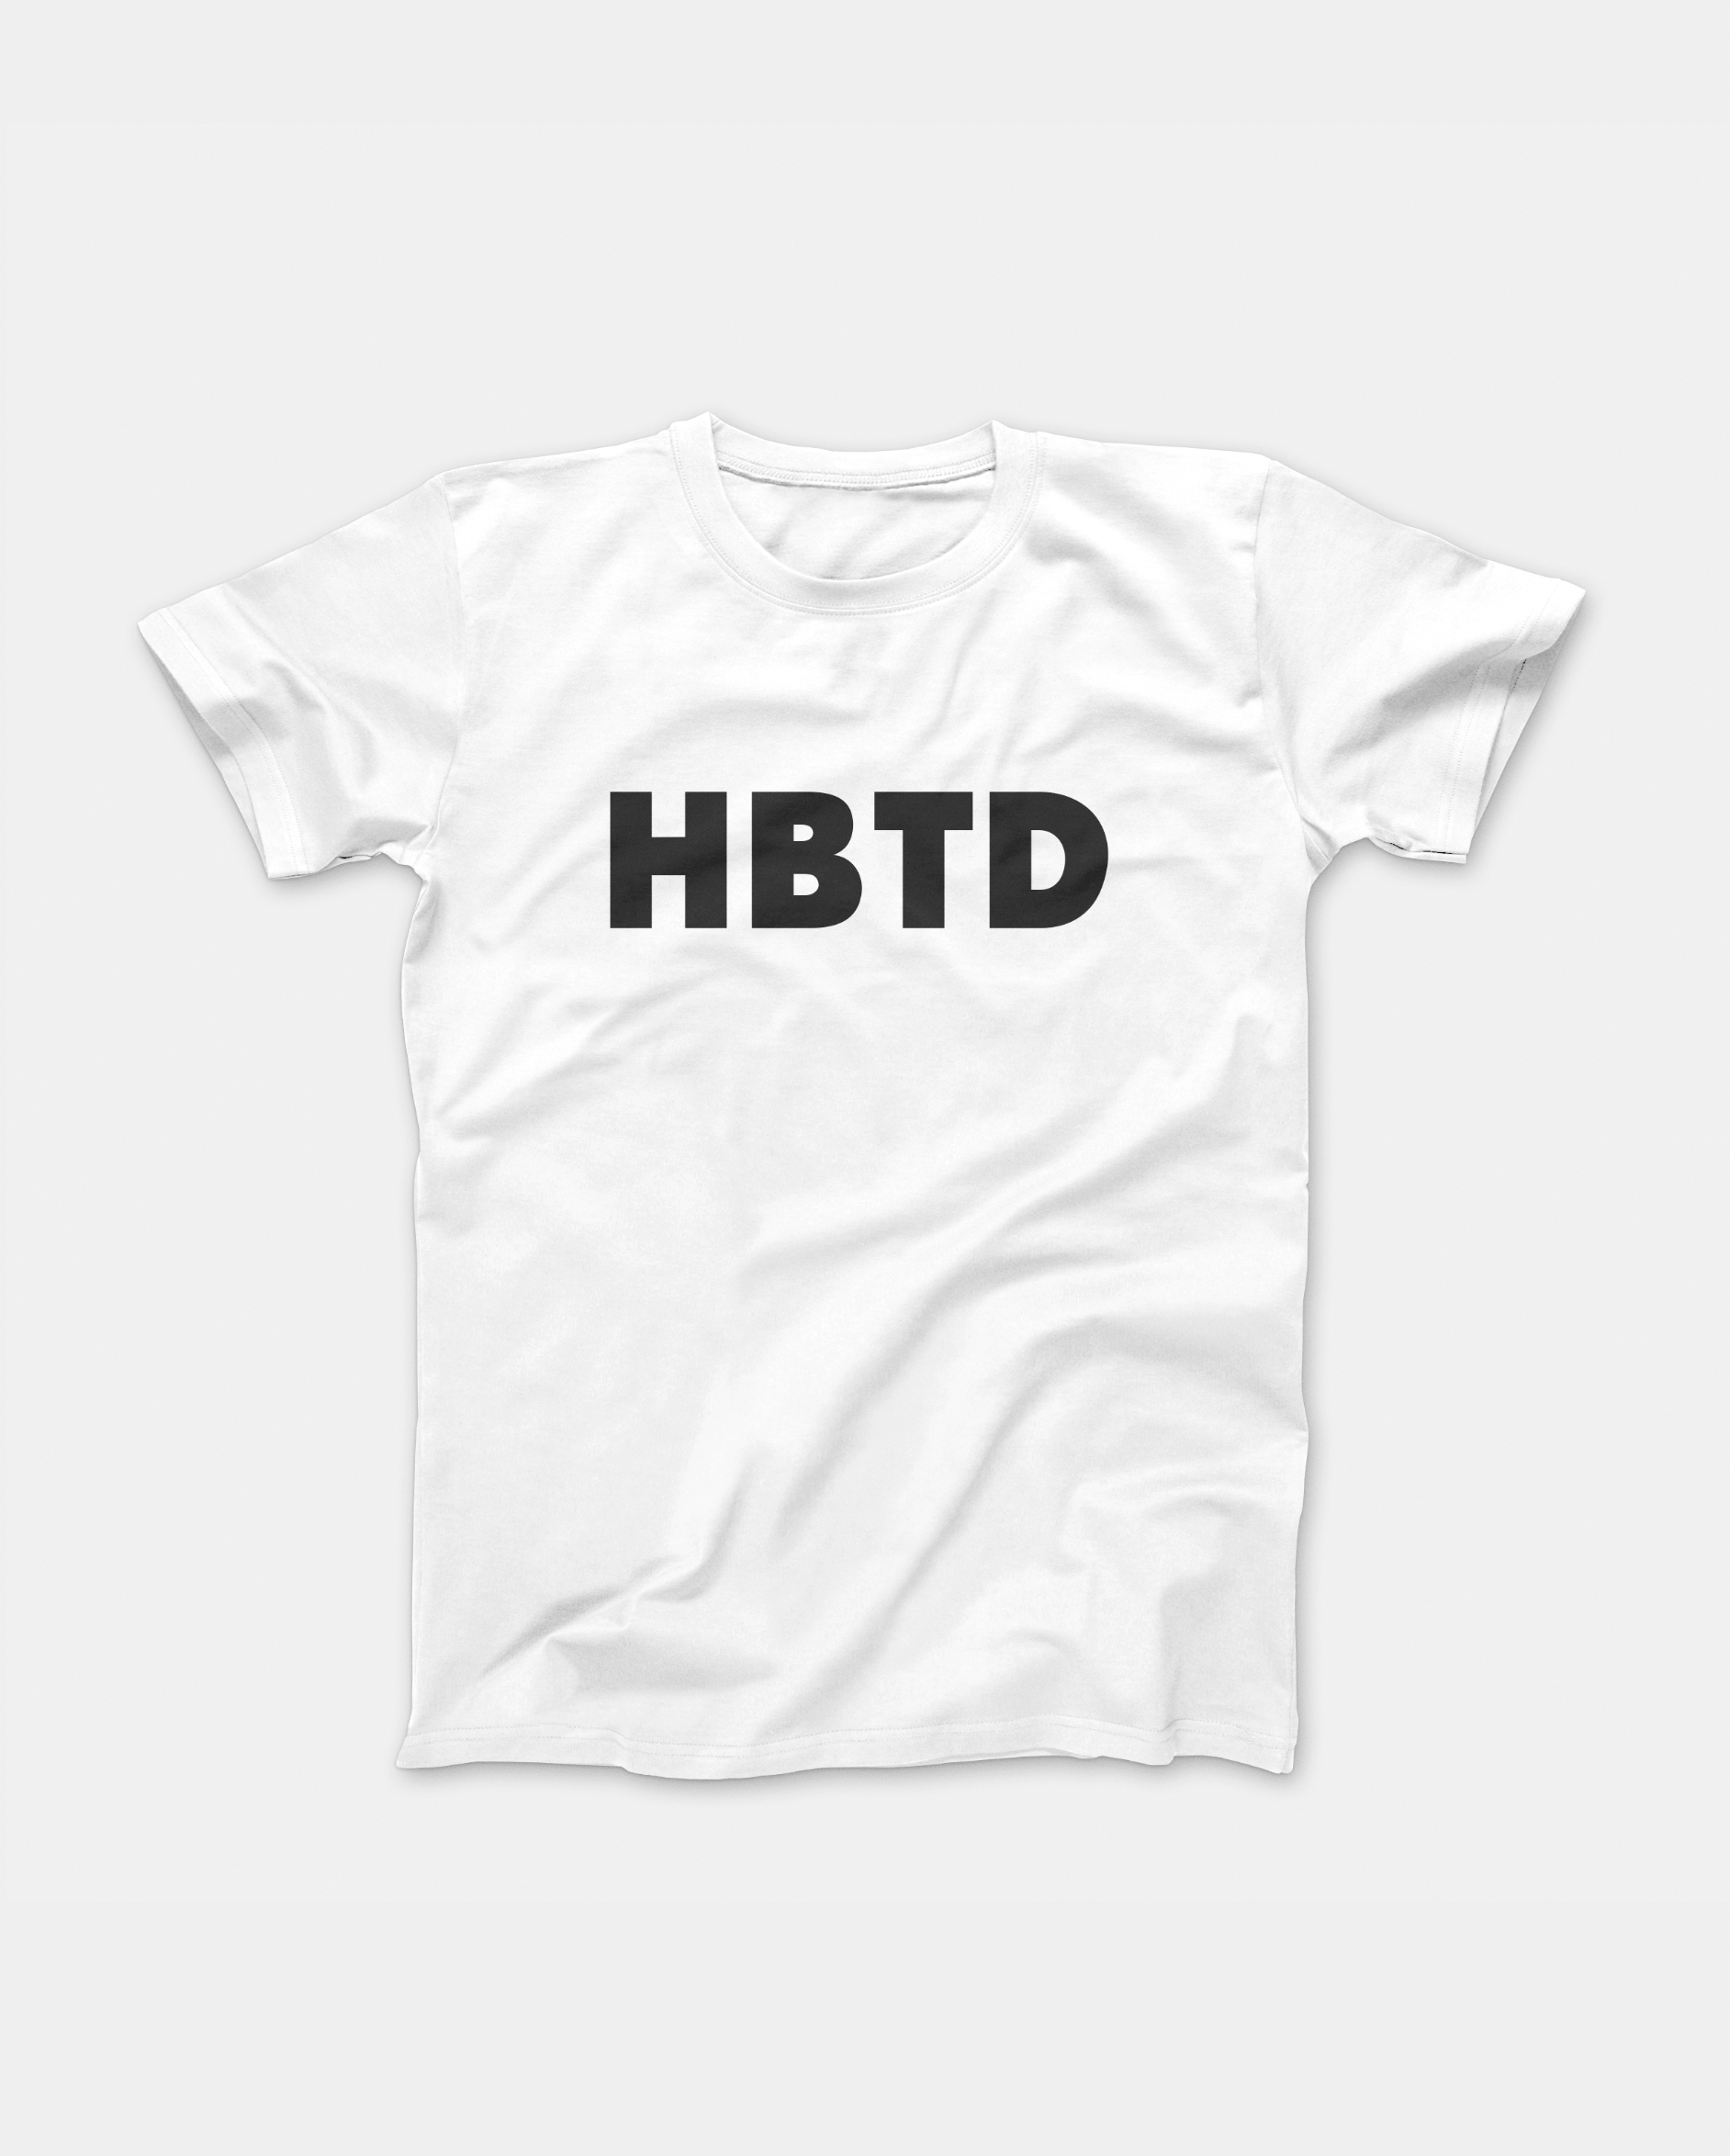 HBTD white